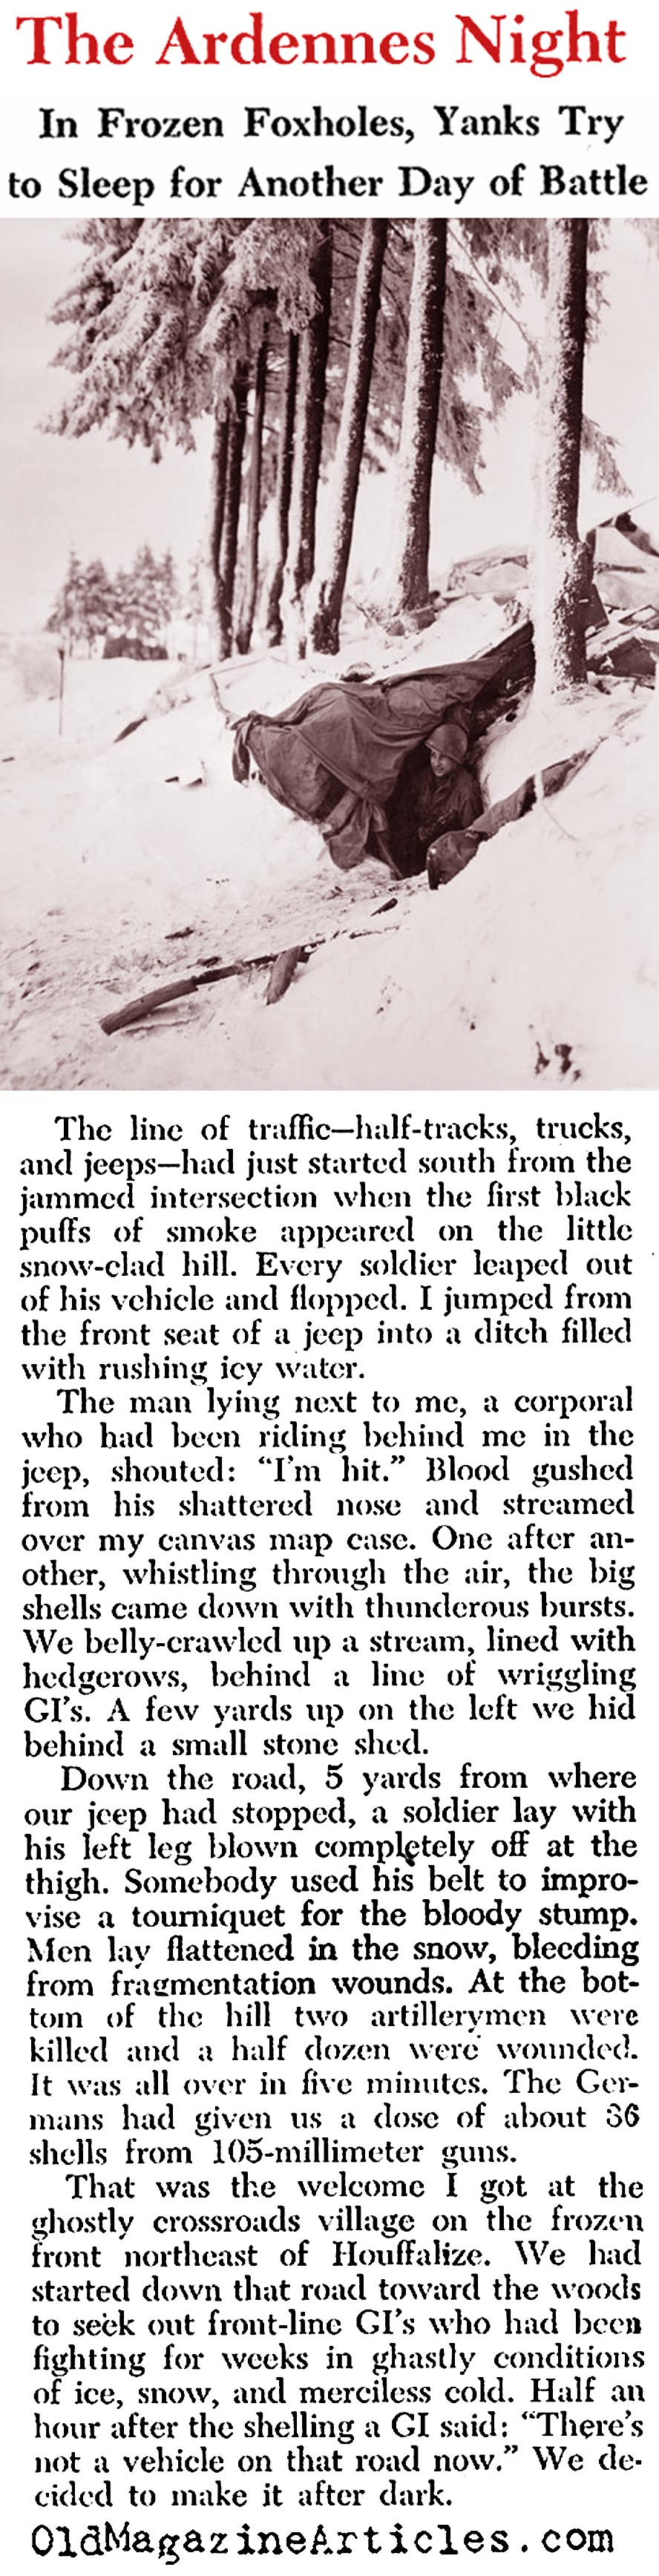 The Suffering Infantry (Newsweek Magazine, 1945)